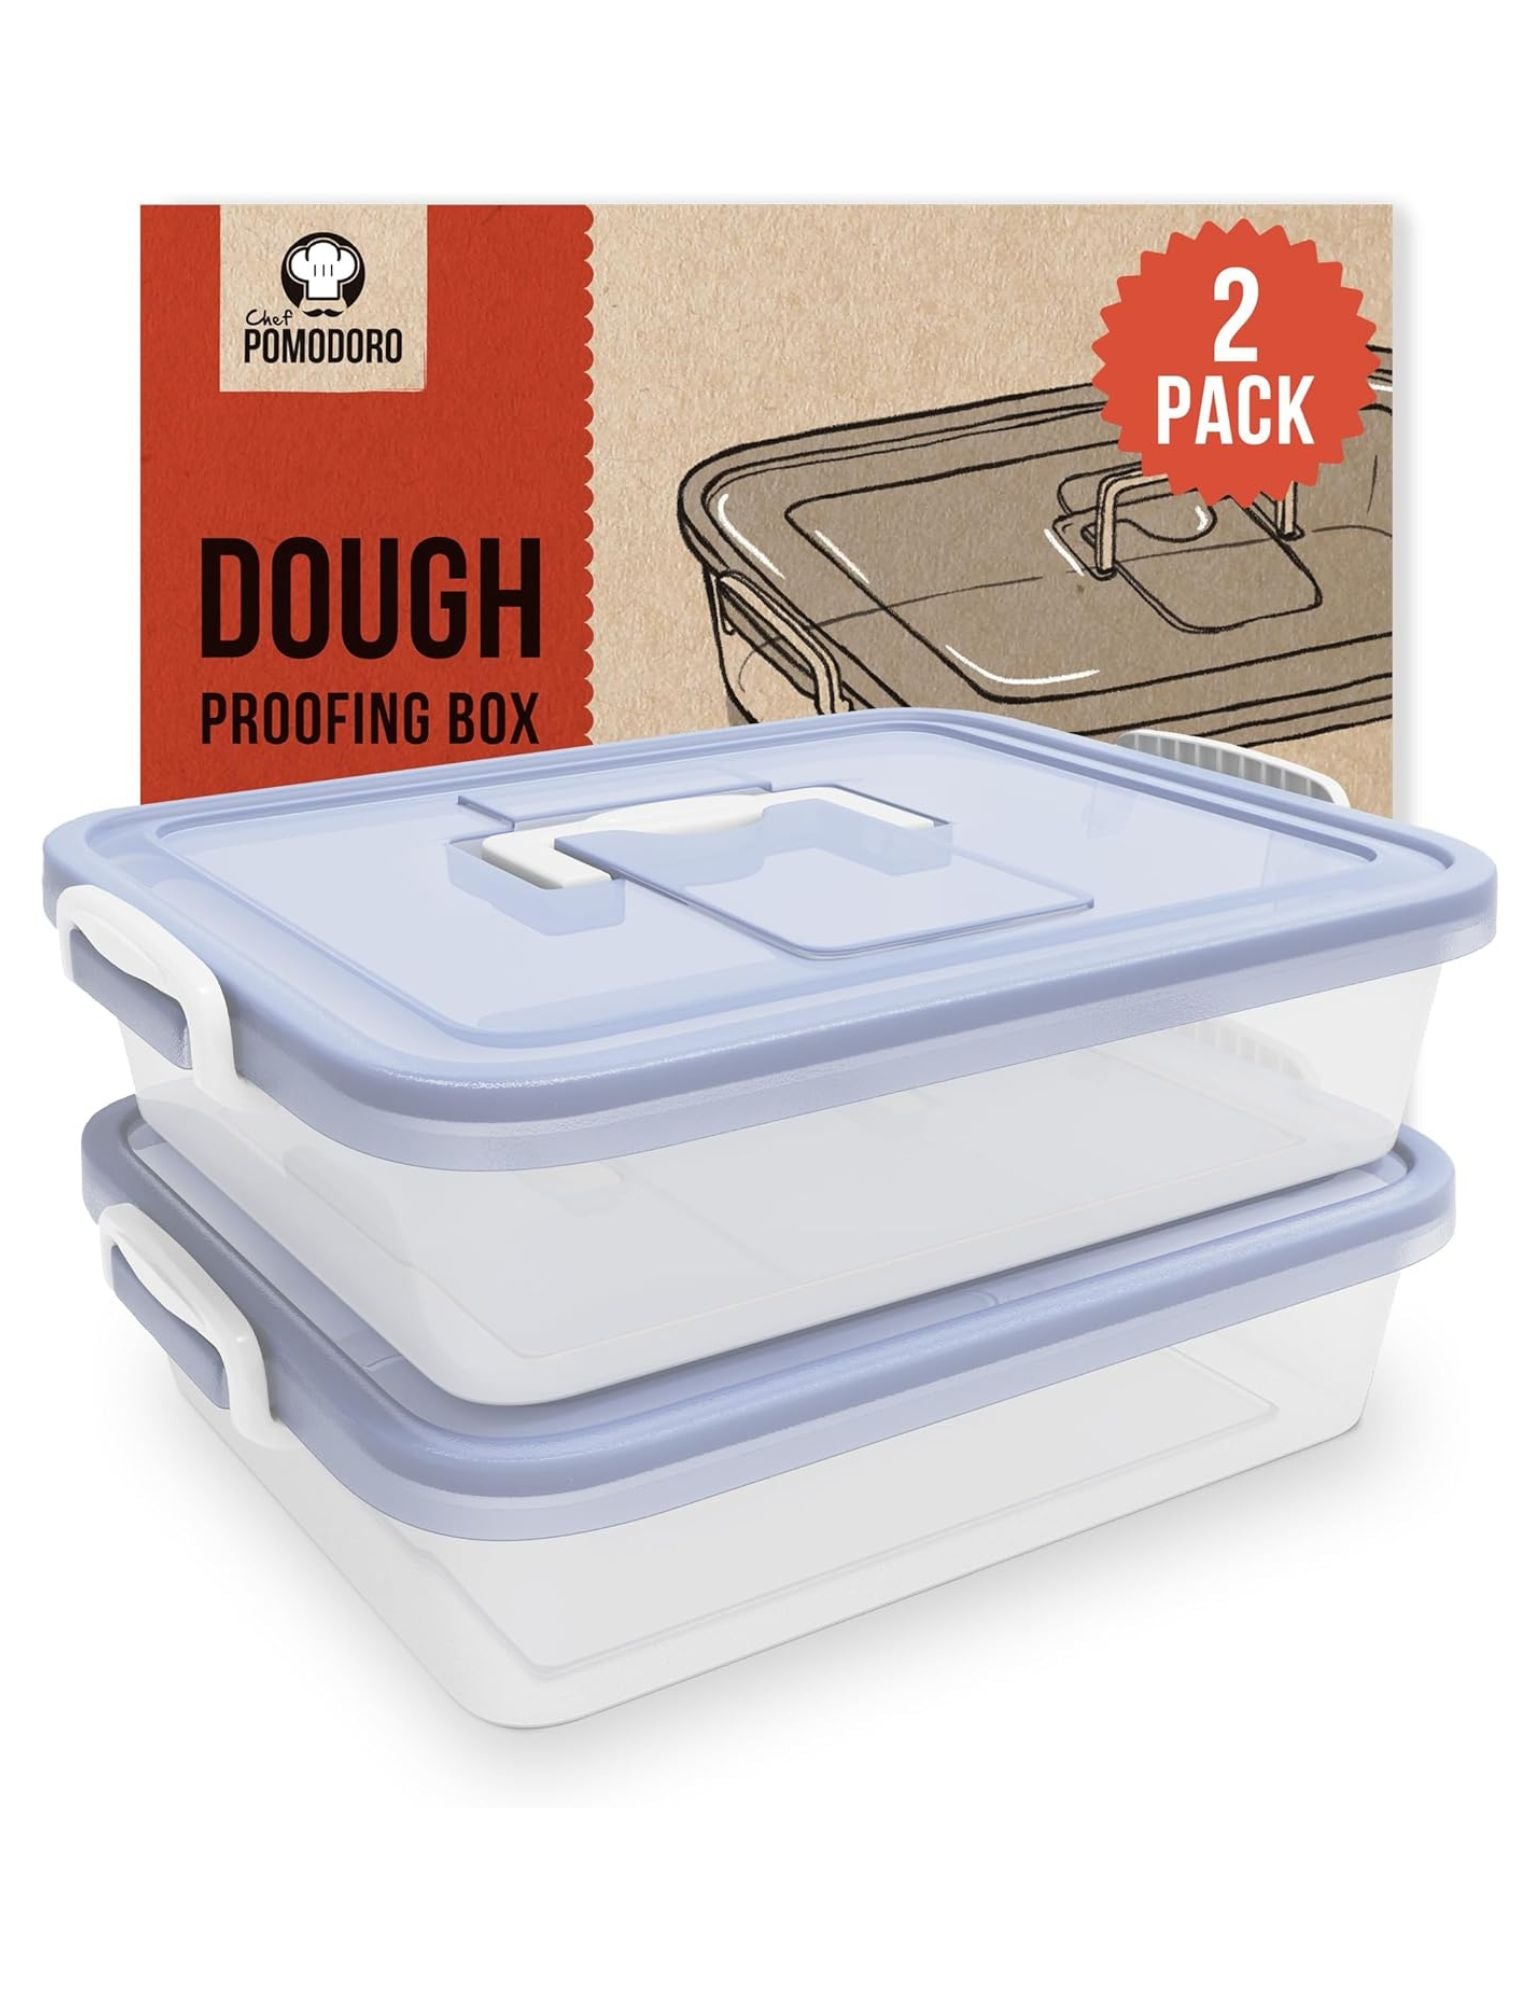 Large Pizza Dough Proofing Box Kit 2-Pack, 17 x 13-Inch, Fits 6-8 Dough Balls (Blue)